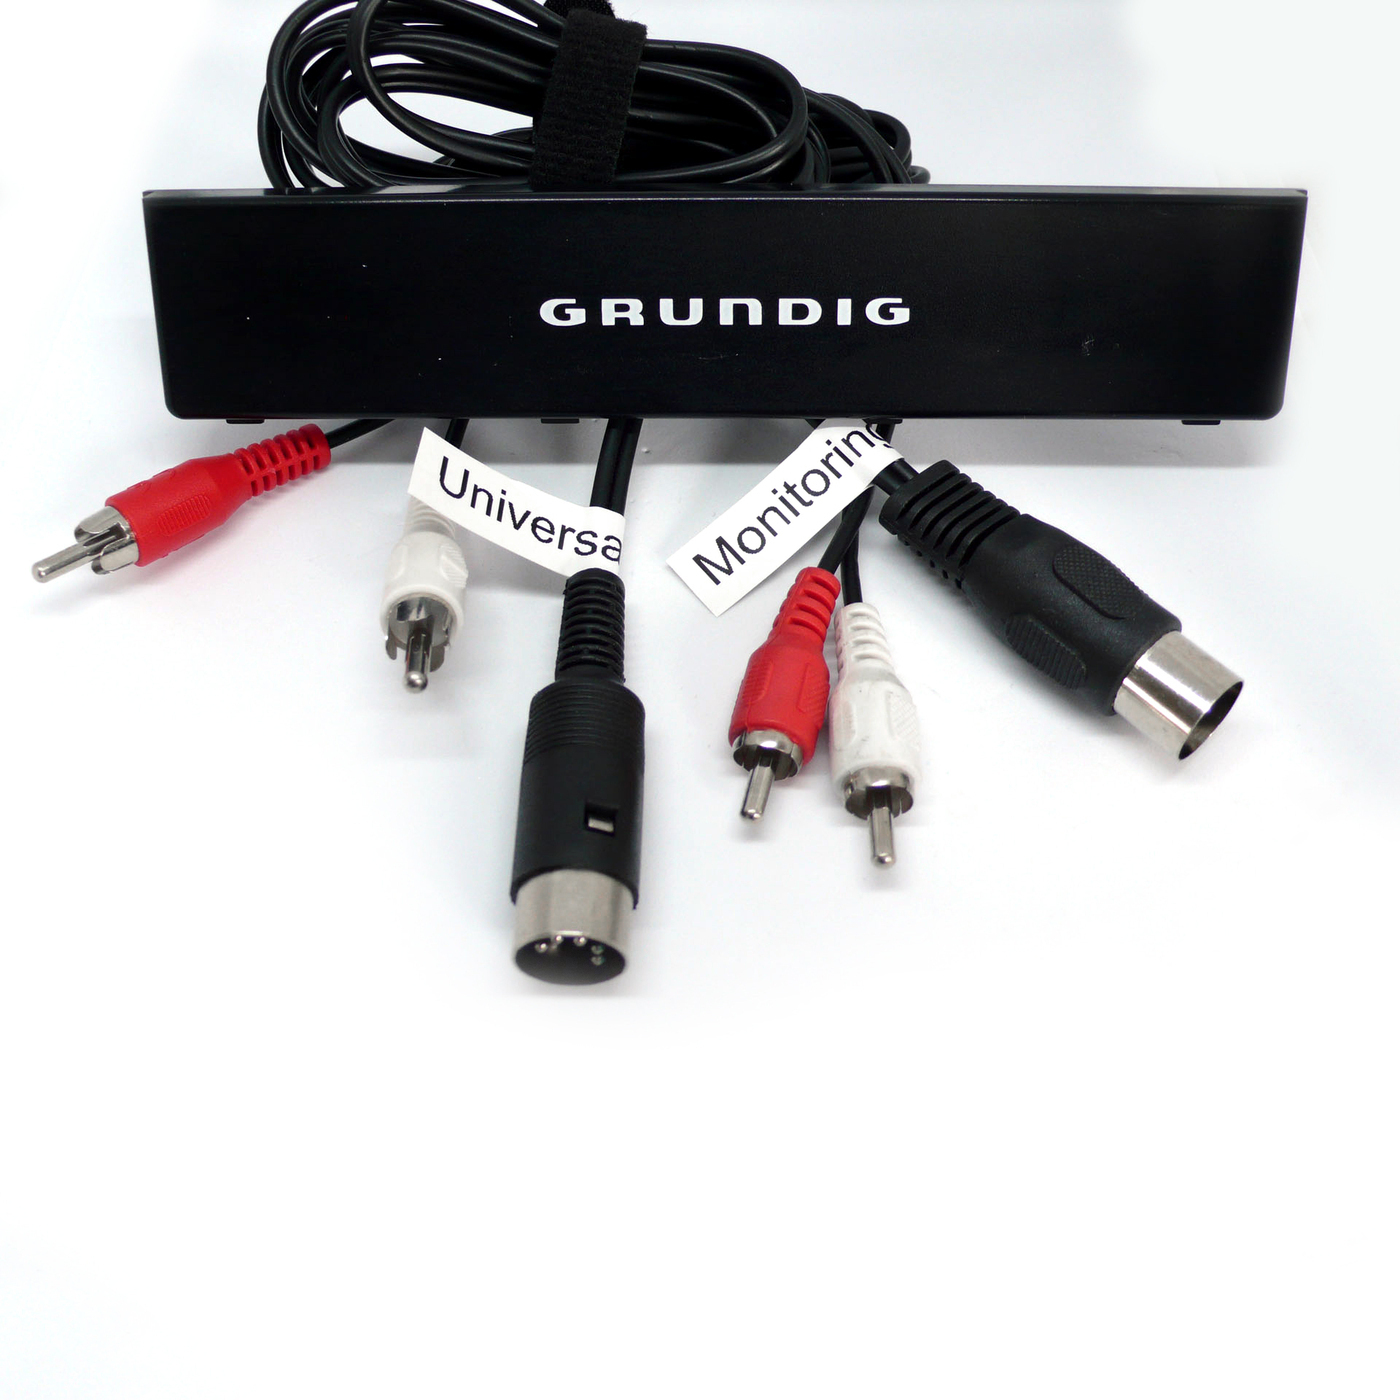 DIN-Kabel Anschluss-Kit für Grundig TS1000, TS945, TS925 u.v.m.